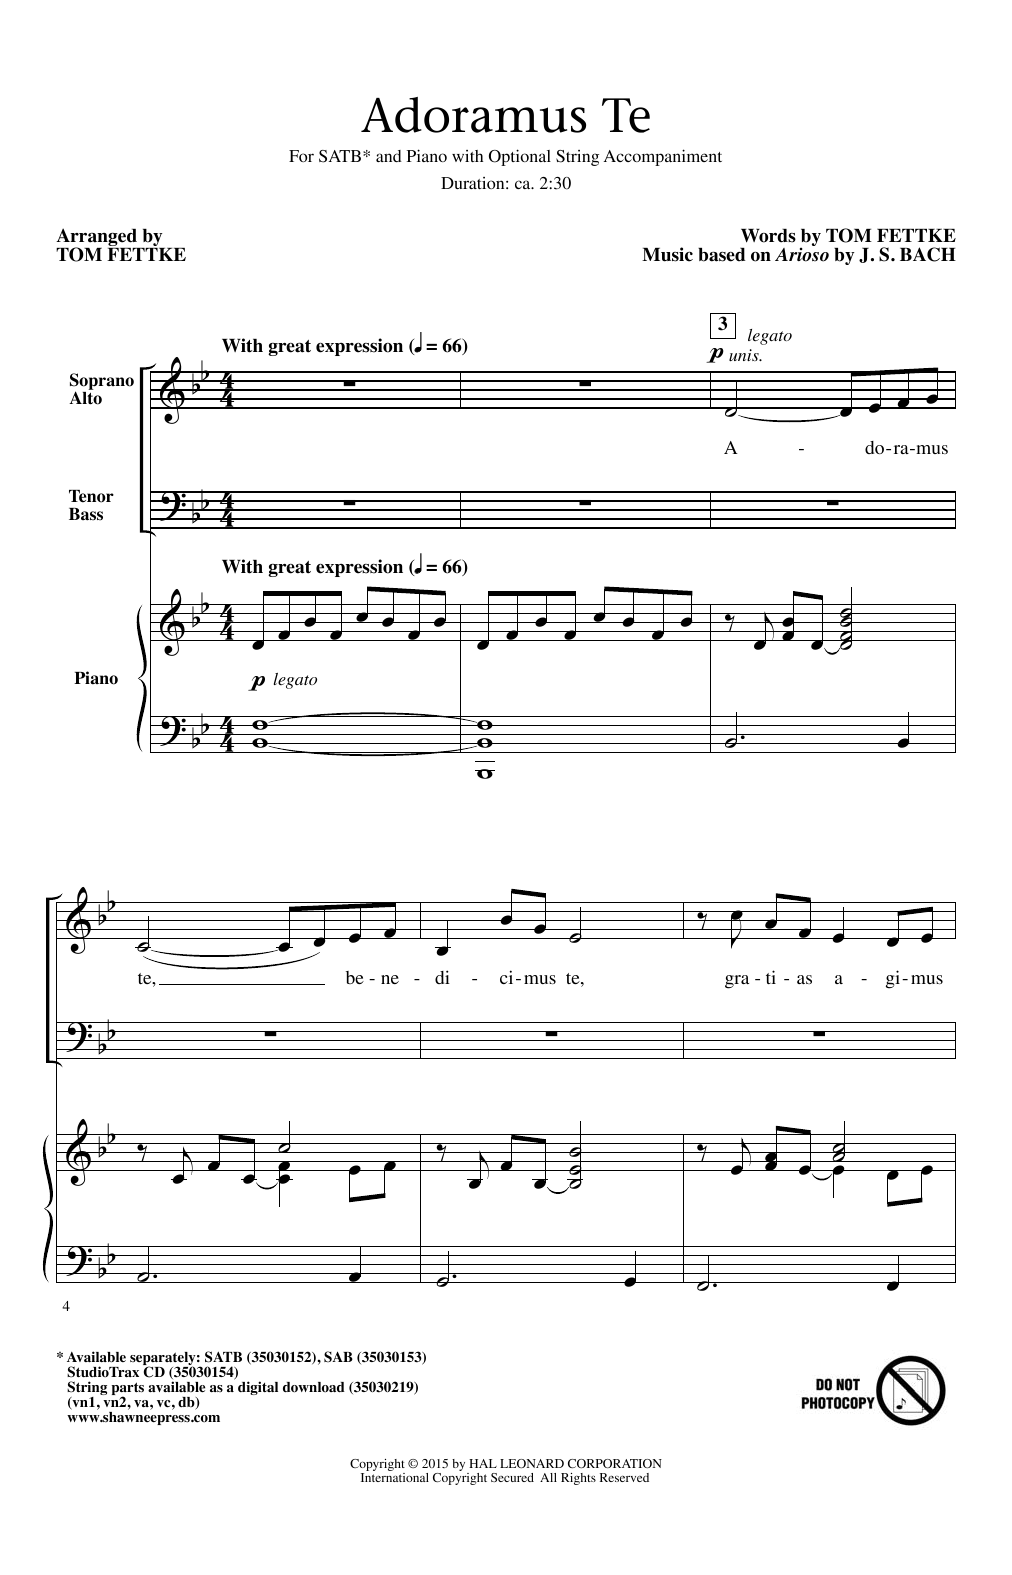 Tom Fettke Adoramus Te Sheet Music Notes & Chords for SATB - Download or Print PDF